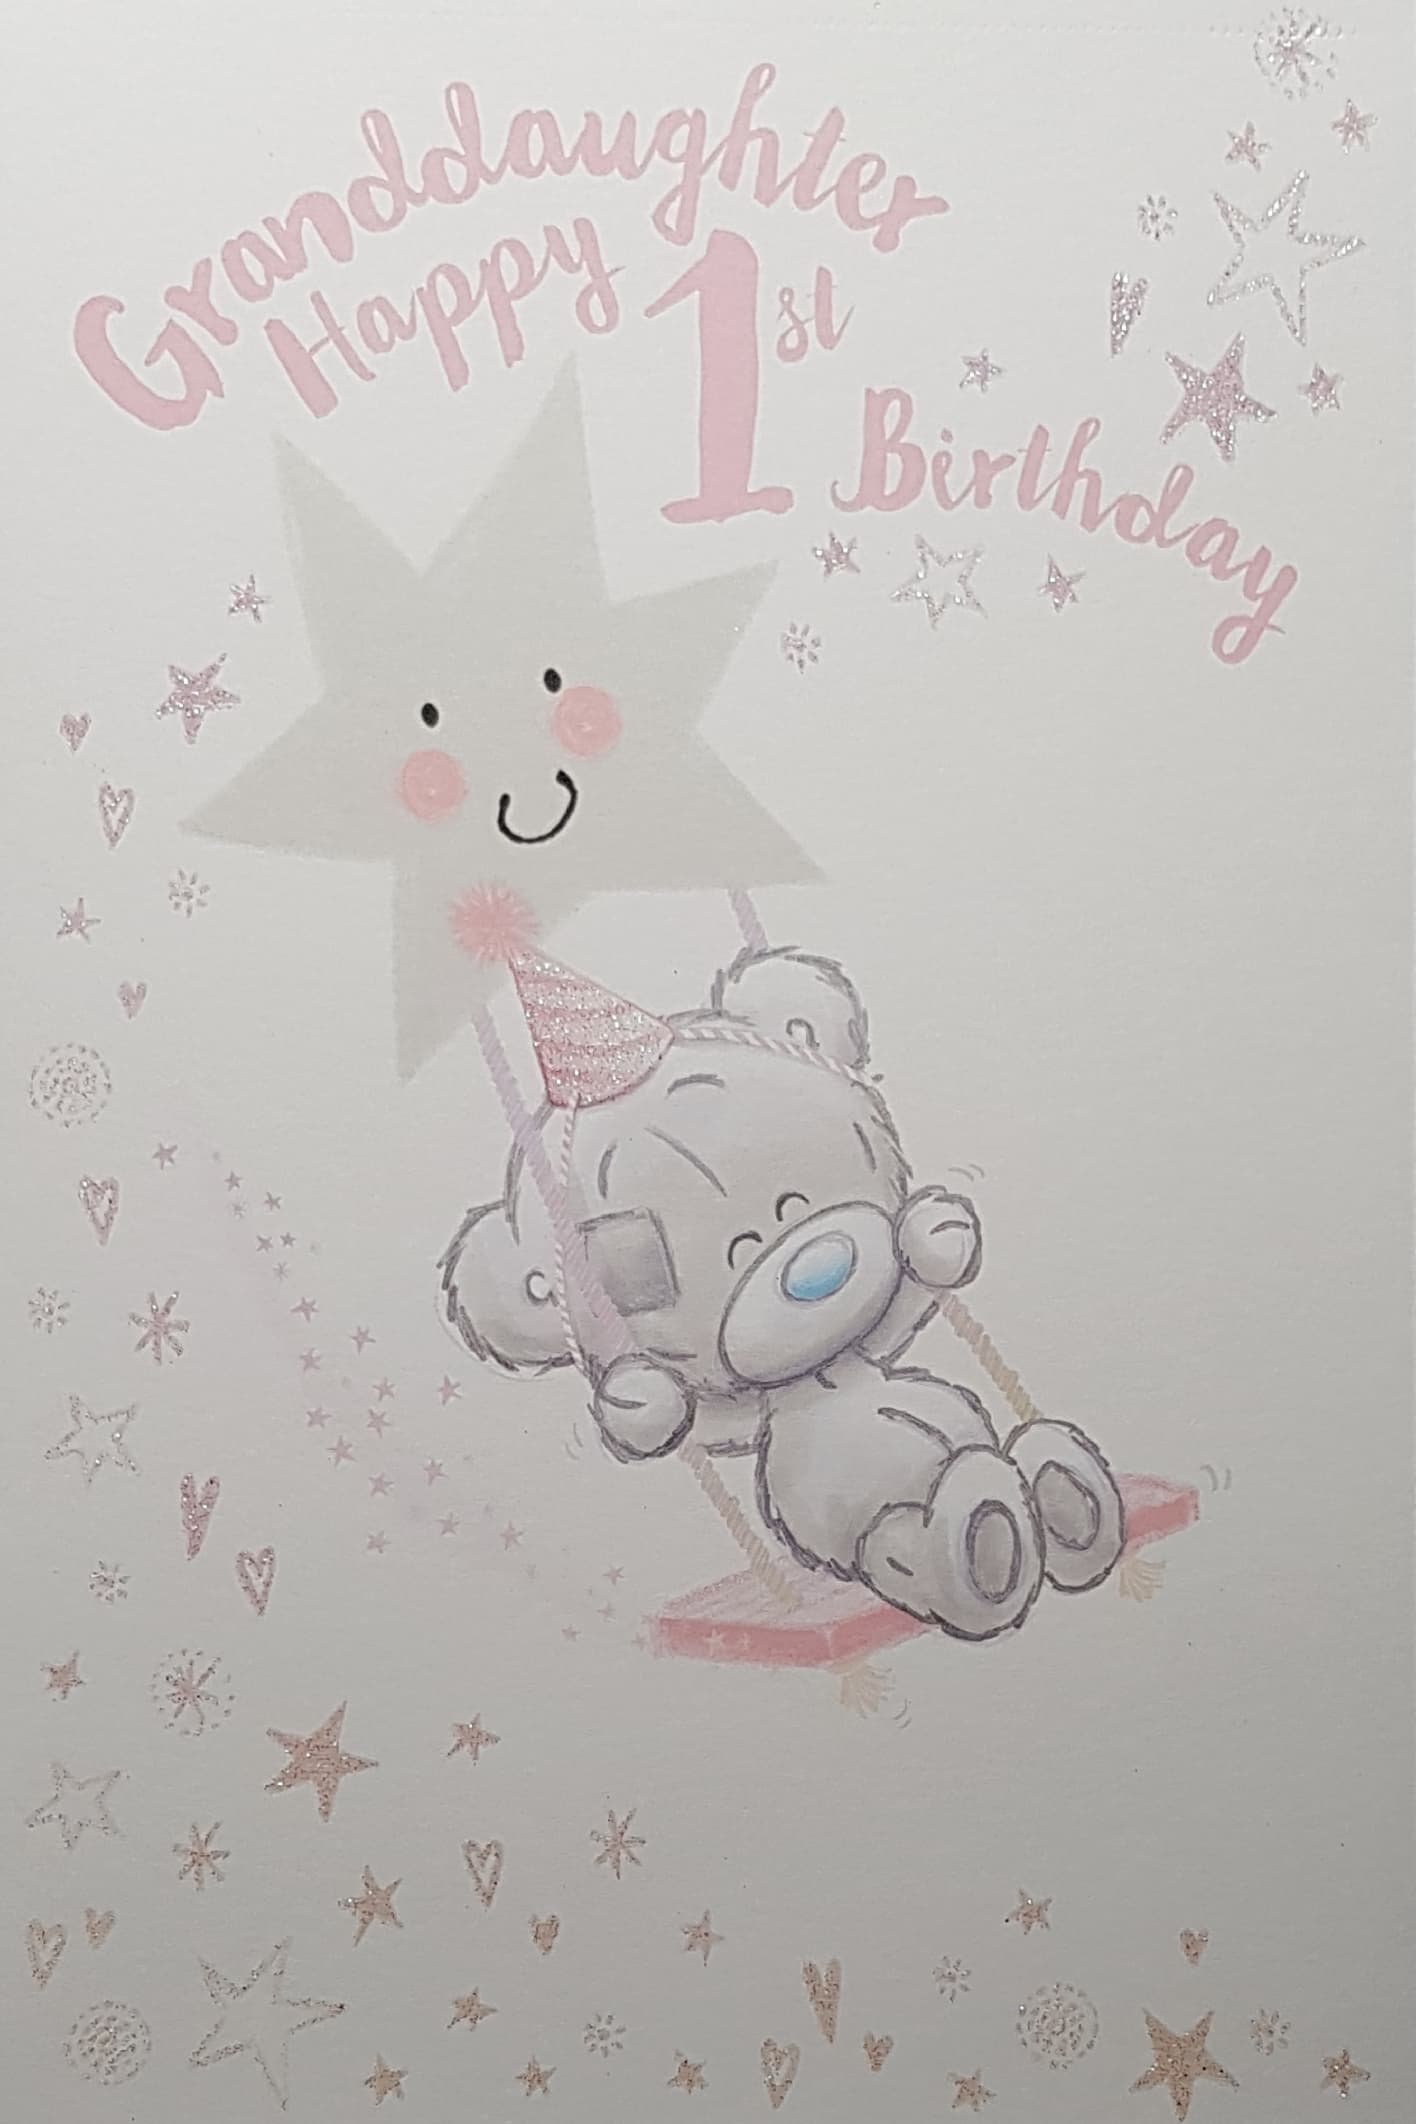 Age 1 Birthday Card - Granddaughter / Teddy Swinging & A Happy Star